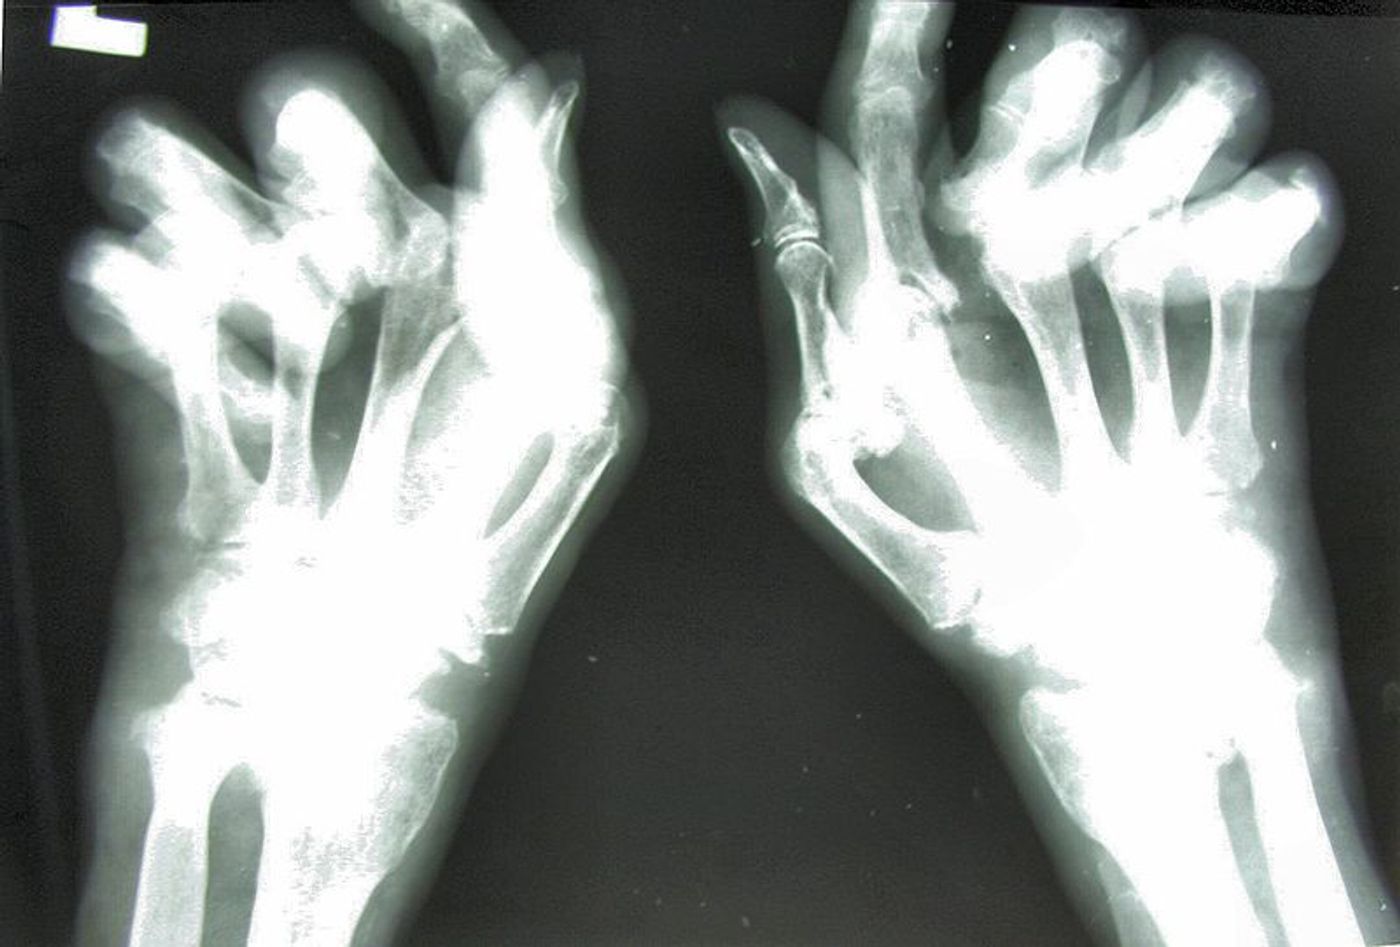 Rheumatoid arthritis: X-ray image of the hand with large changes in destructive arthritis.